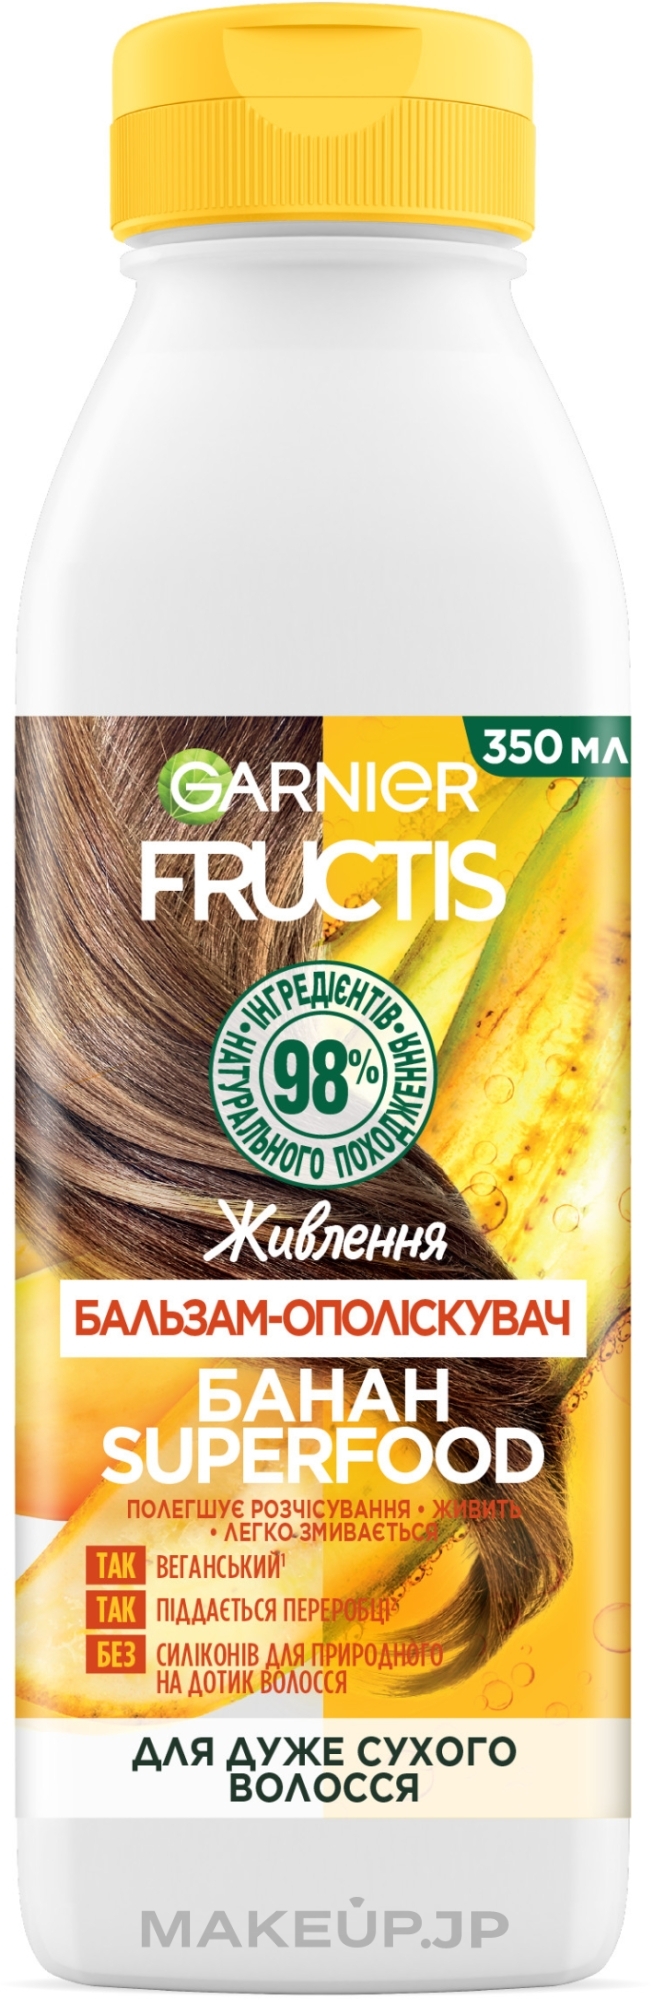 Nourishing Conditioner for Extra Dry Hair "Banana" - Garnier Fructis Superfood — photo 350 ml